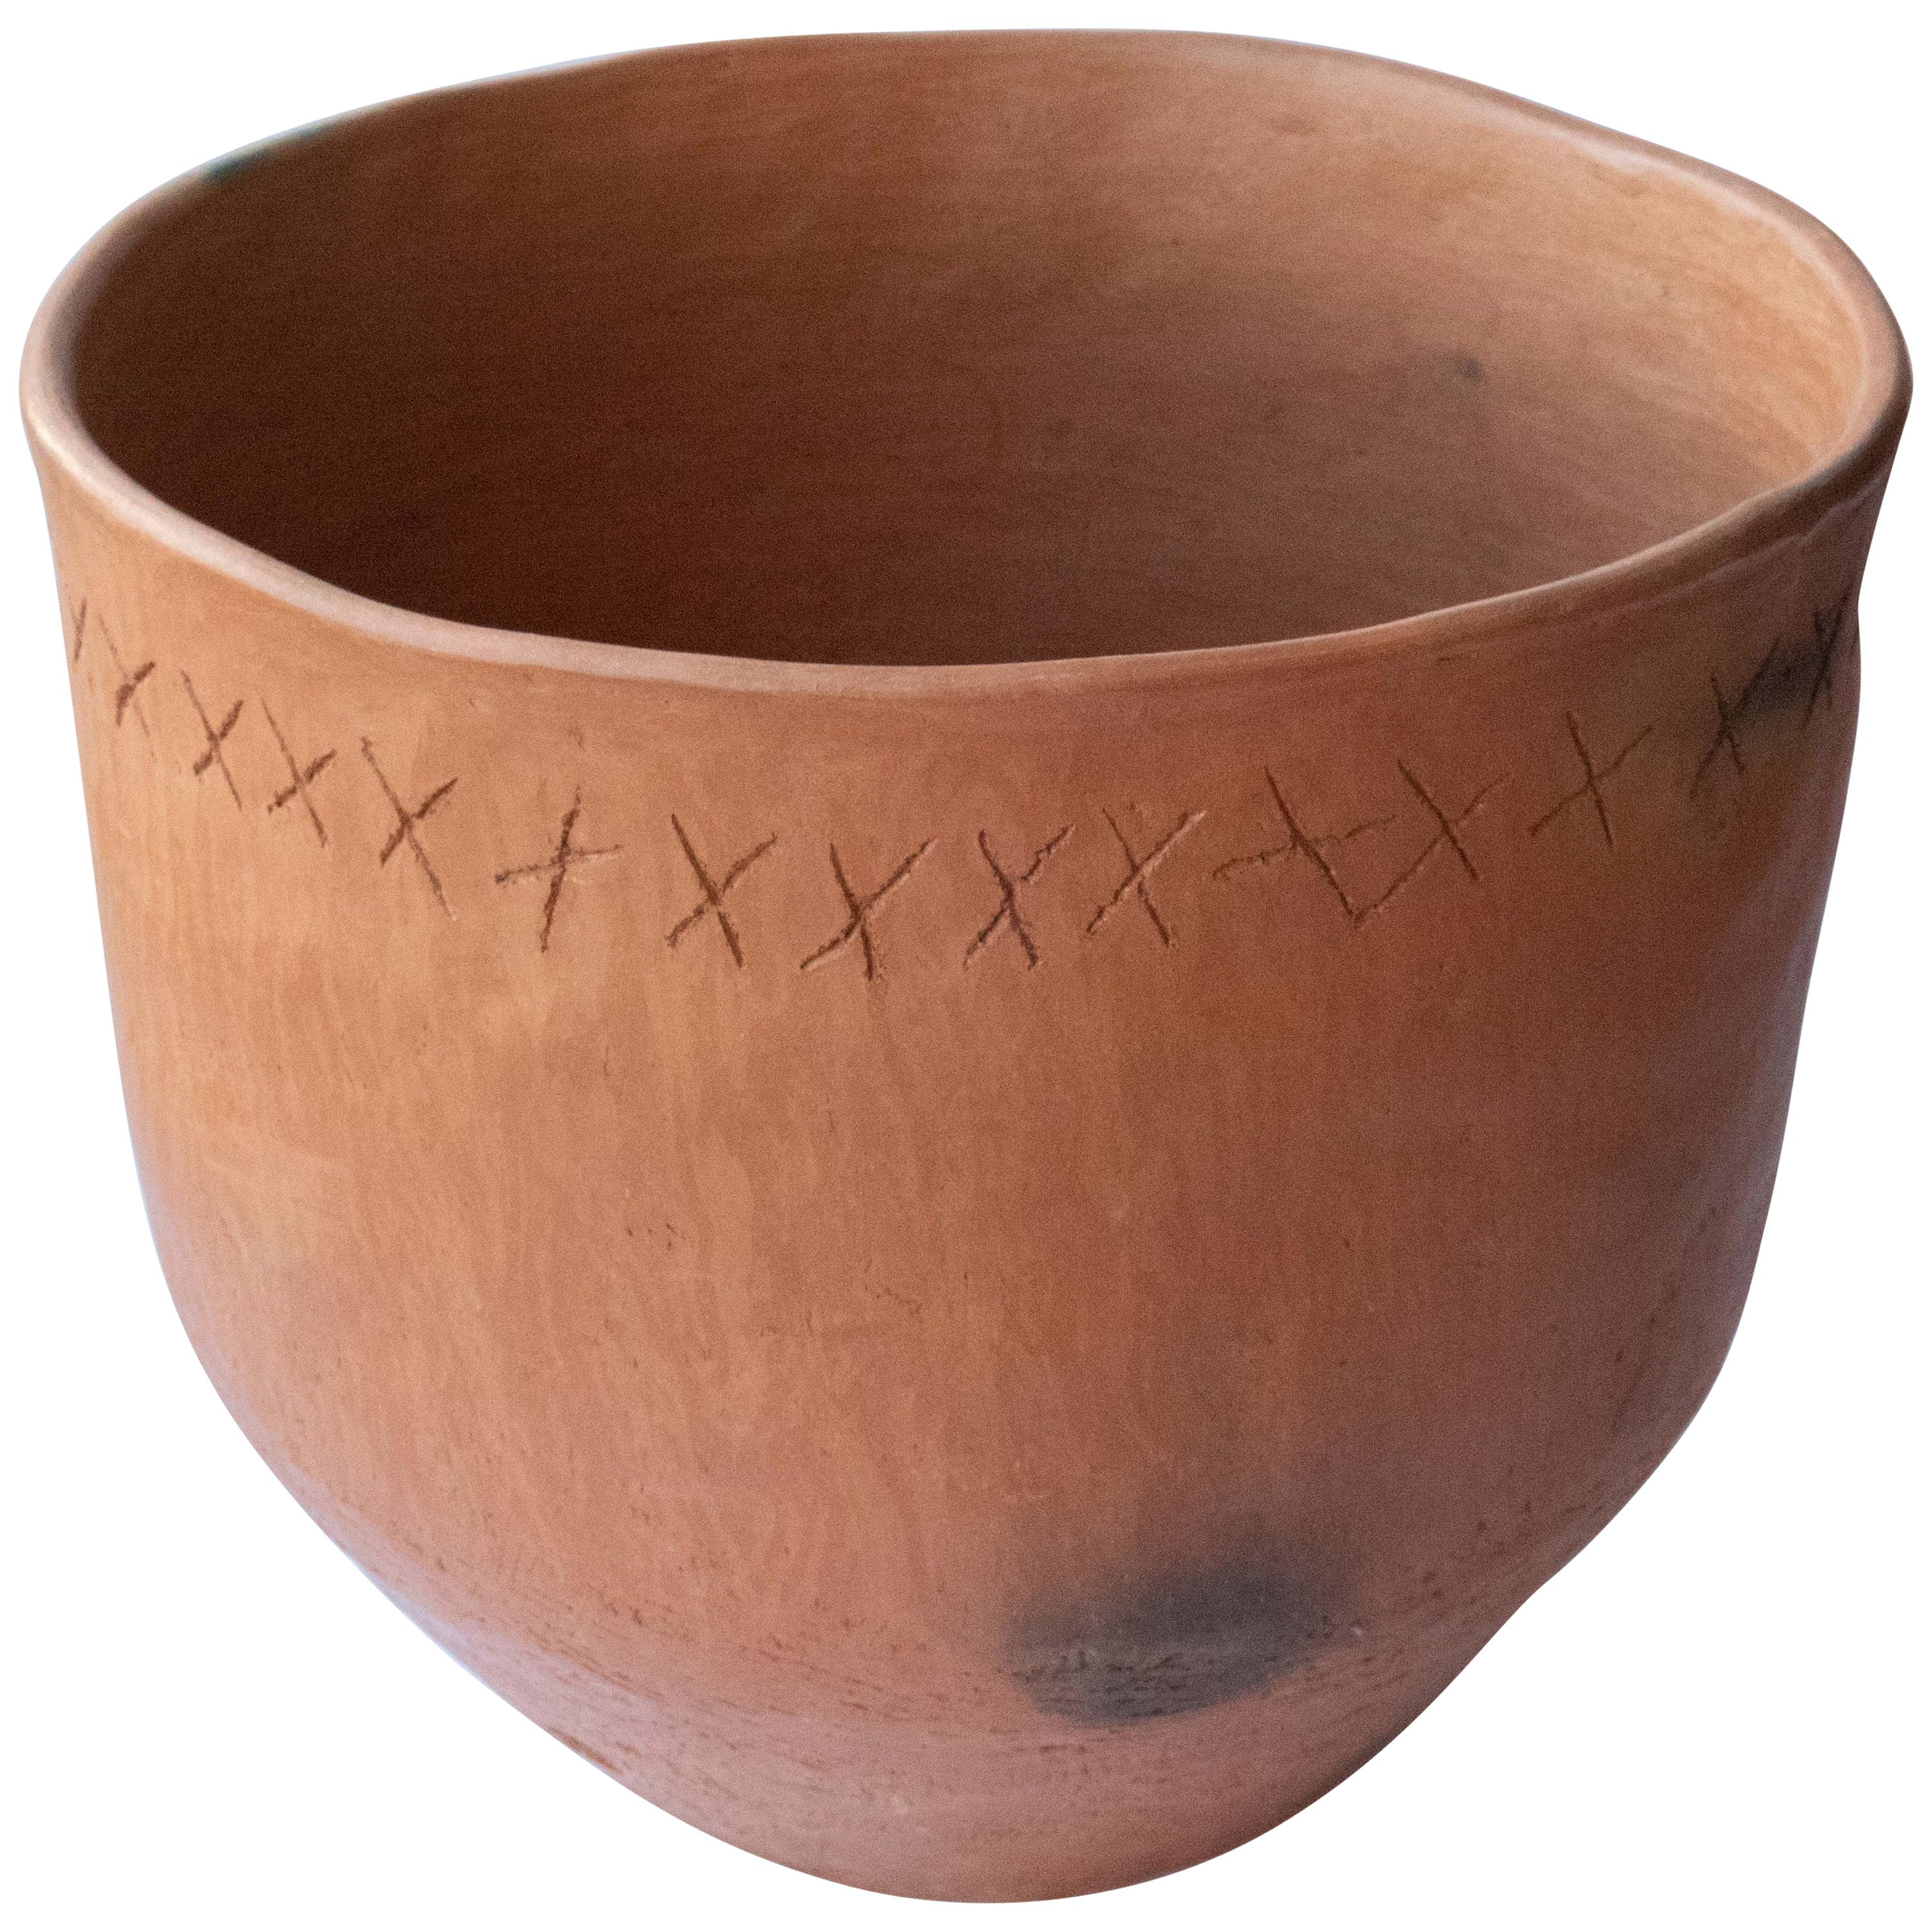 Rustic Pot Mexican Terracotta Natural Clay Handmade in Oaxaca Ceramic Vessel